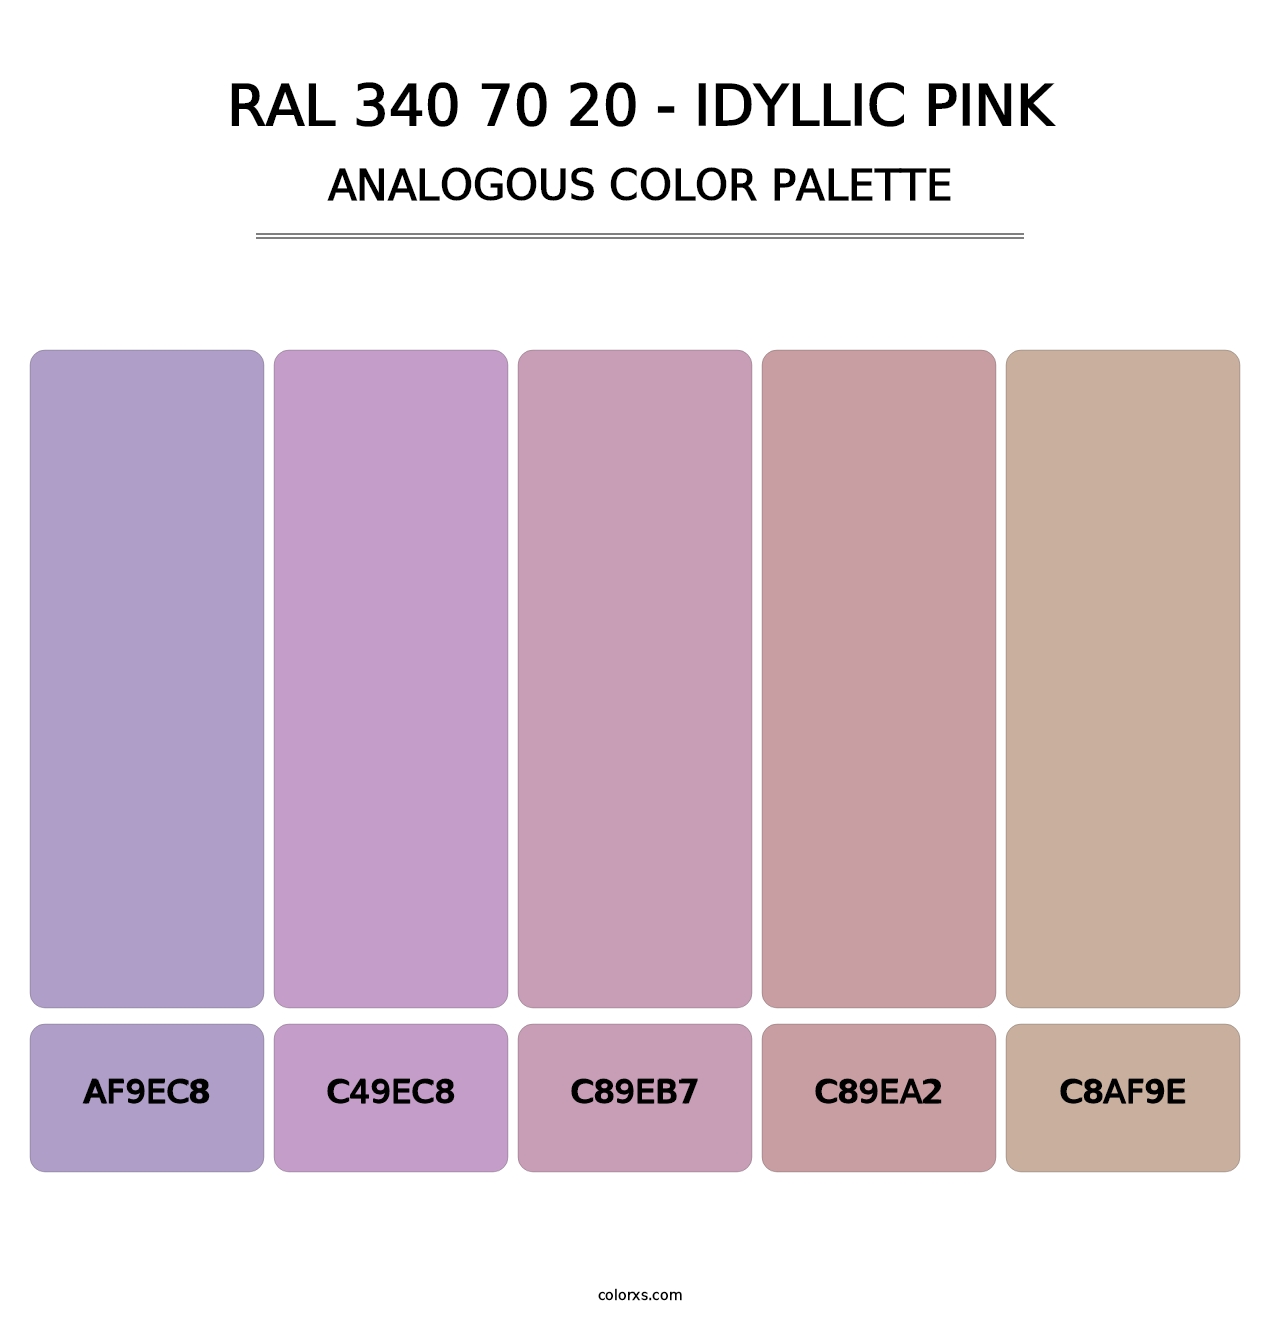 RAL 340 70 20 - Idyllic Pink - Analogous Color Palette